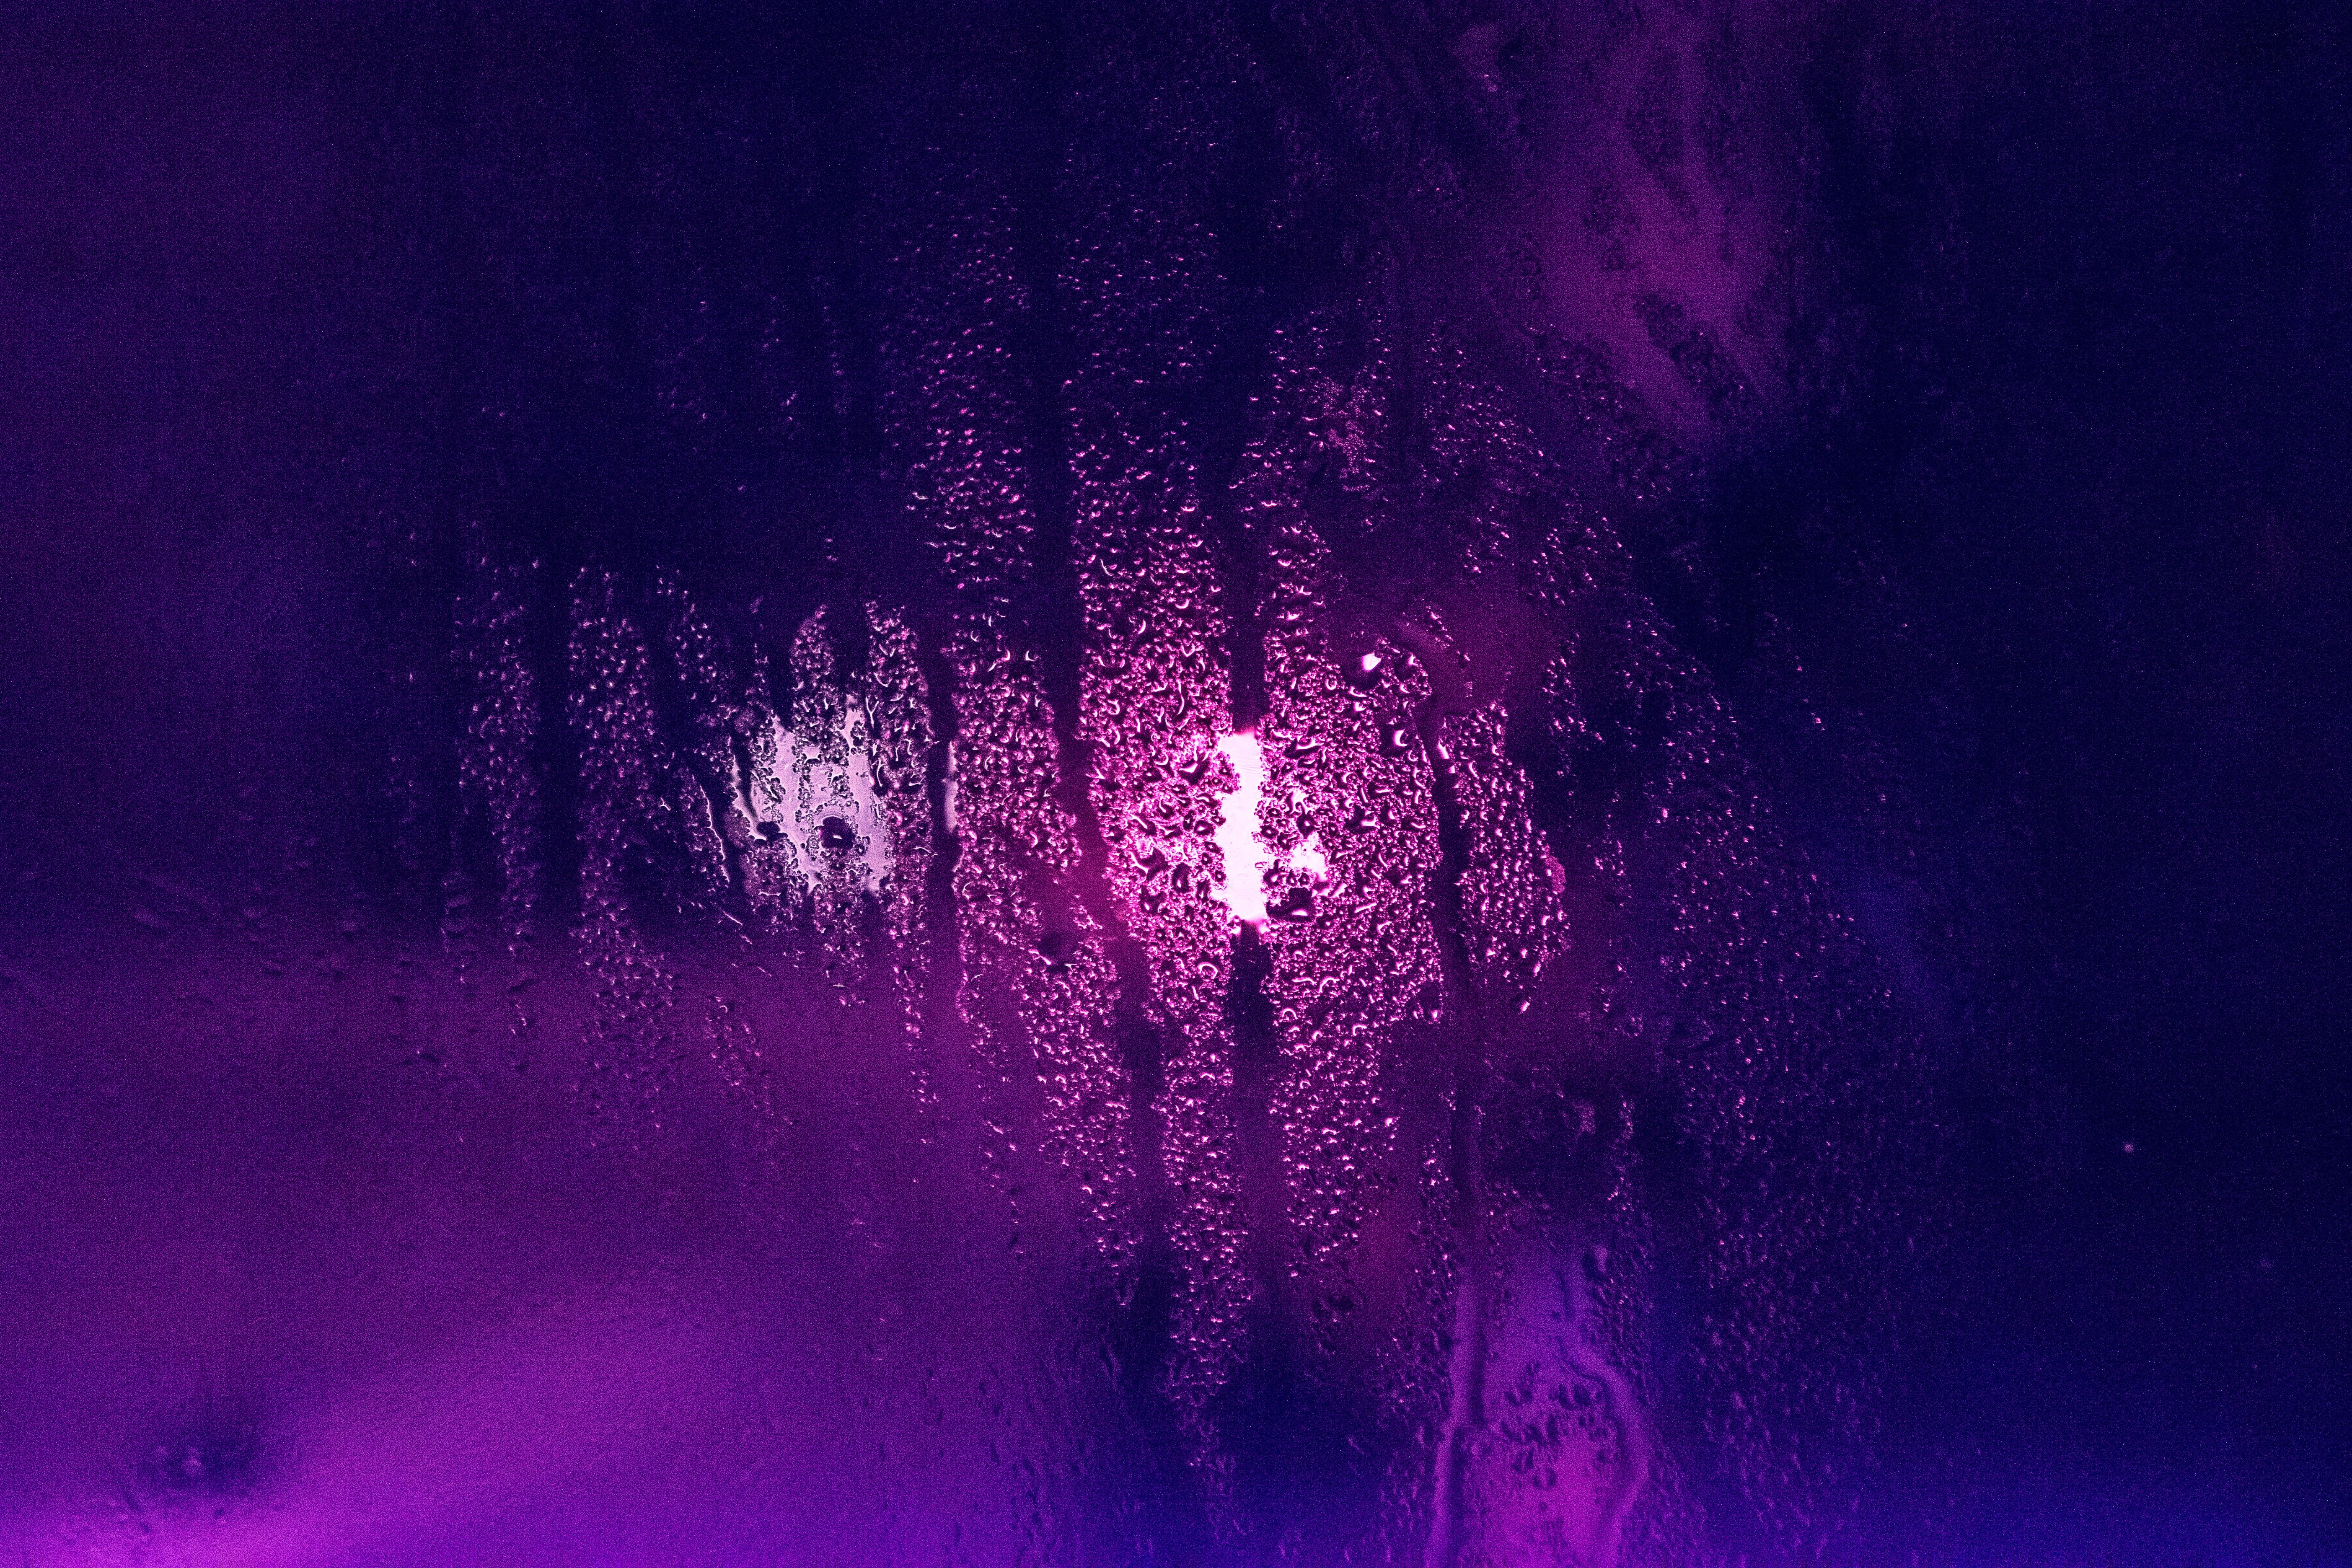 Purple Wallpapers: Free HD Download [500+ HQ]